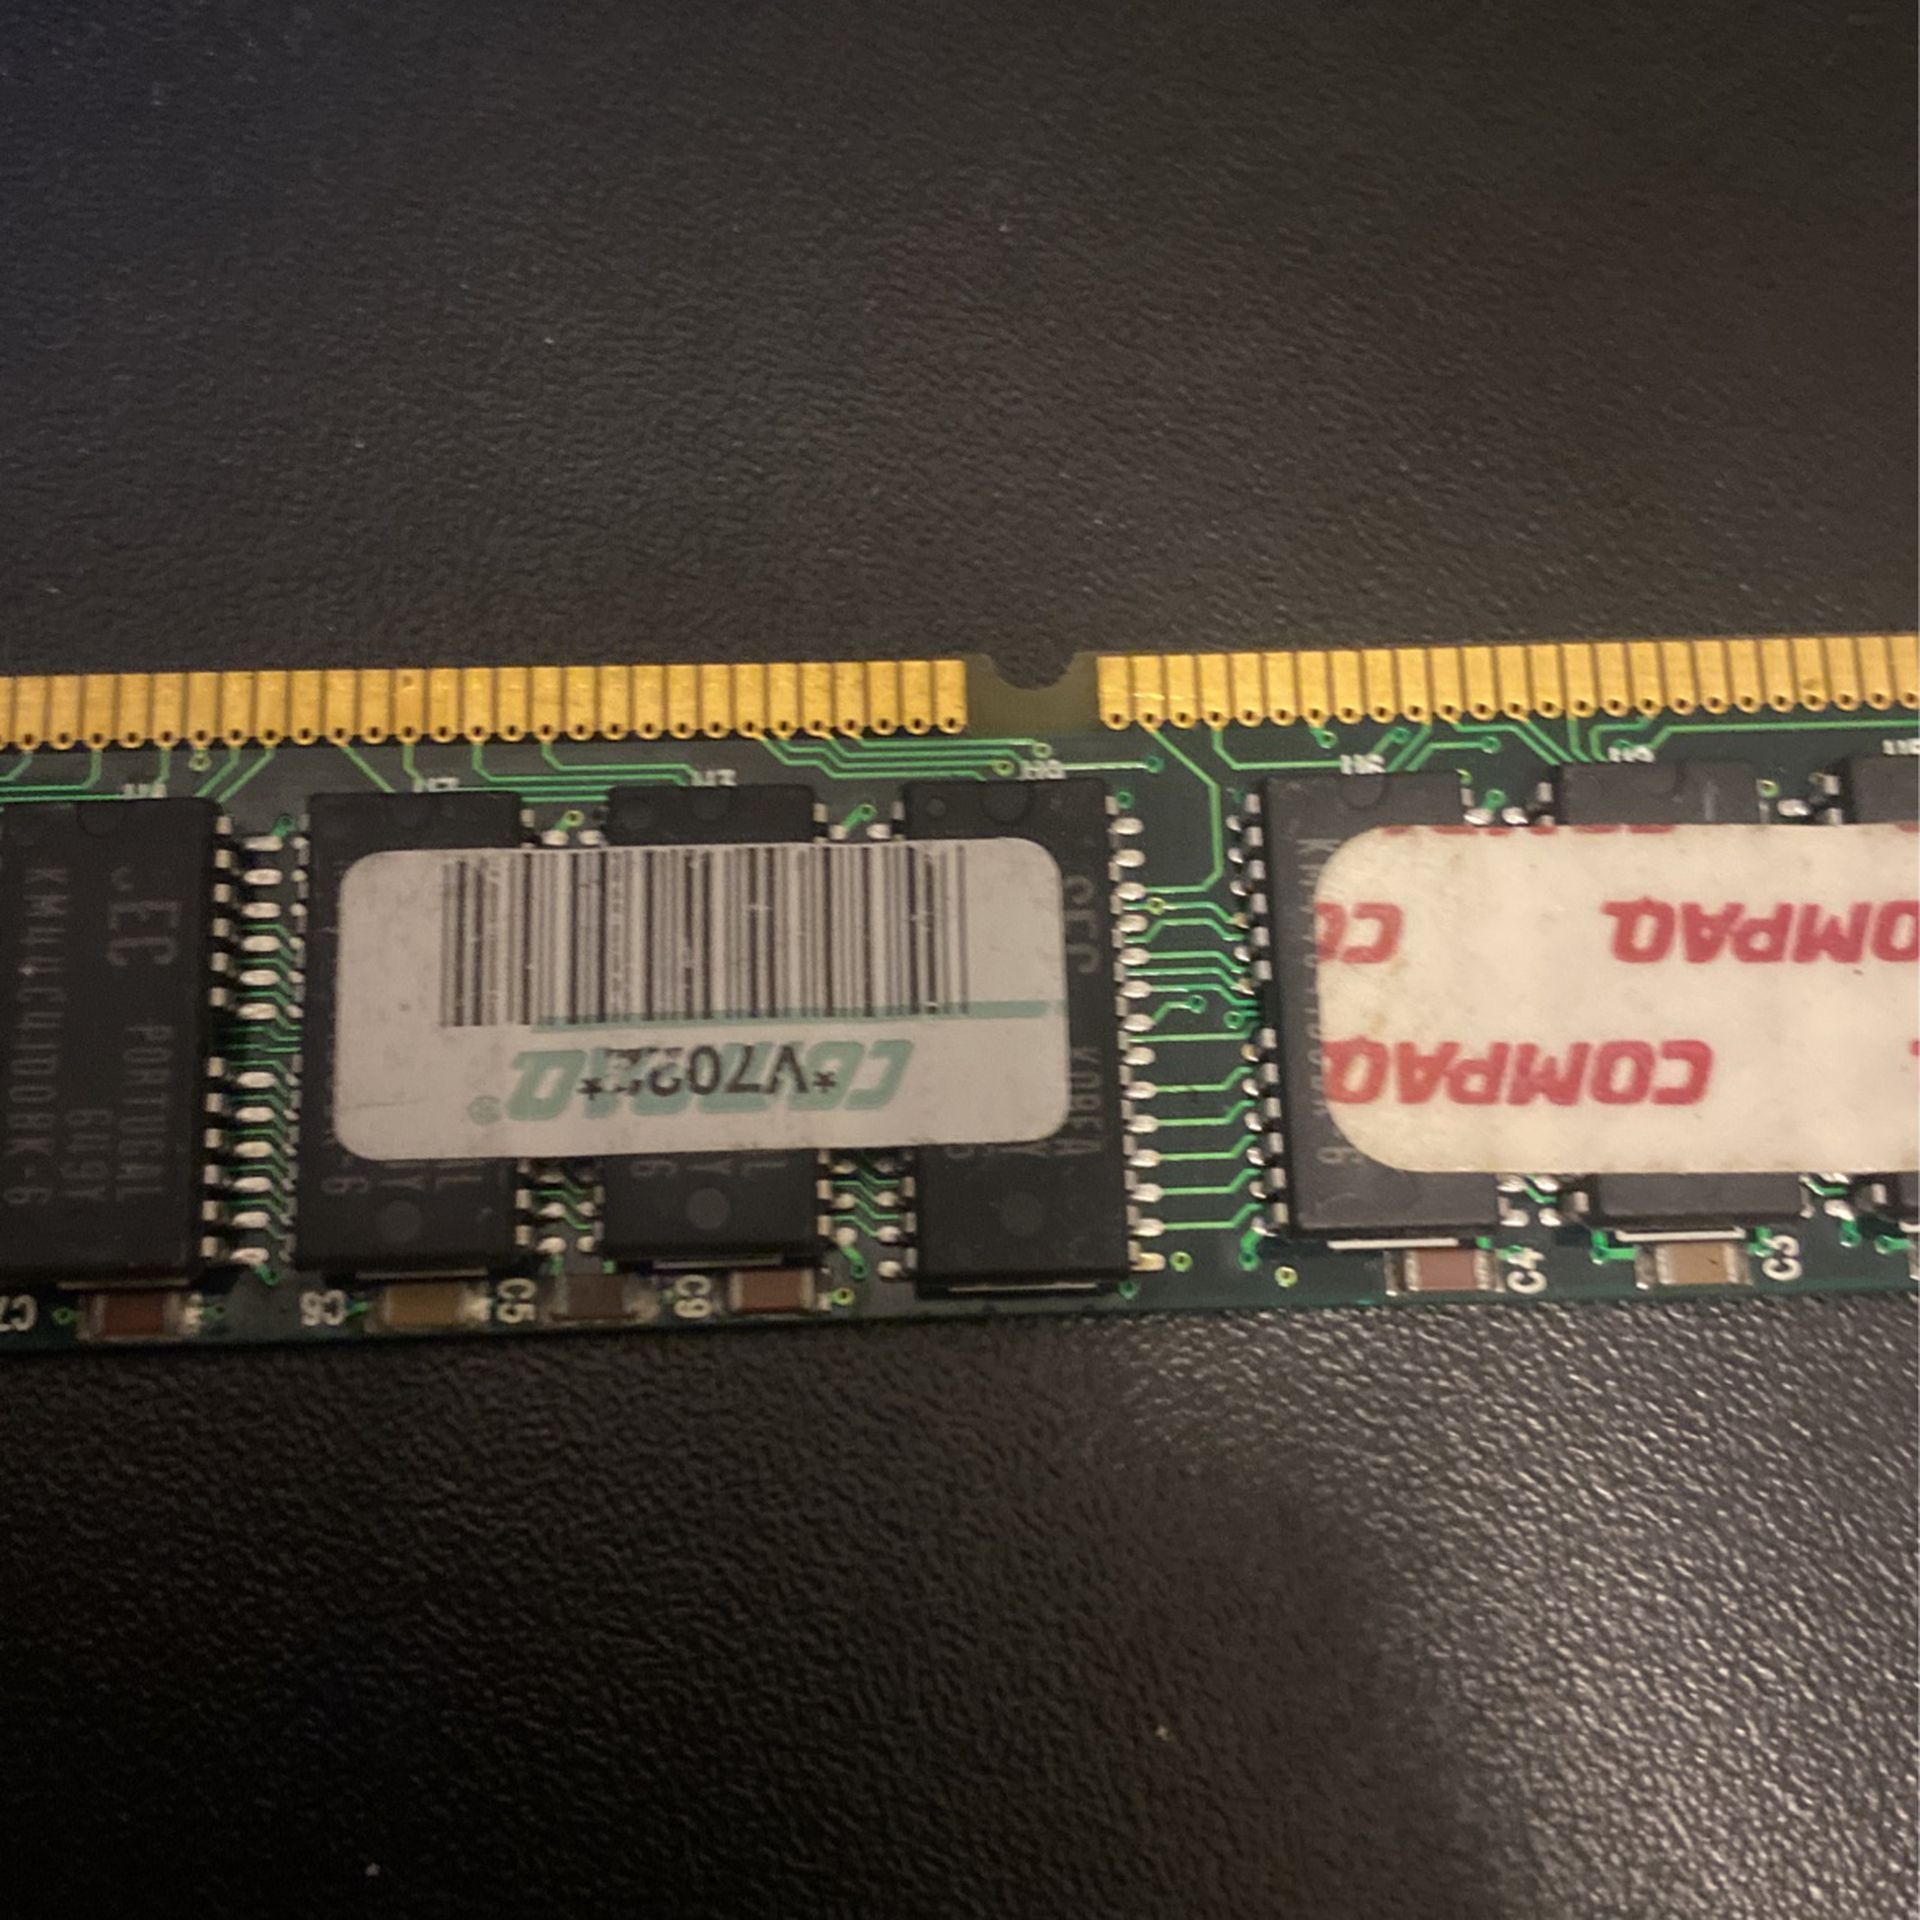 8gb Ram And 128 Gb Memory Sticks